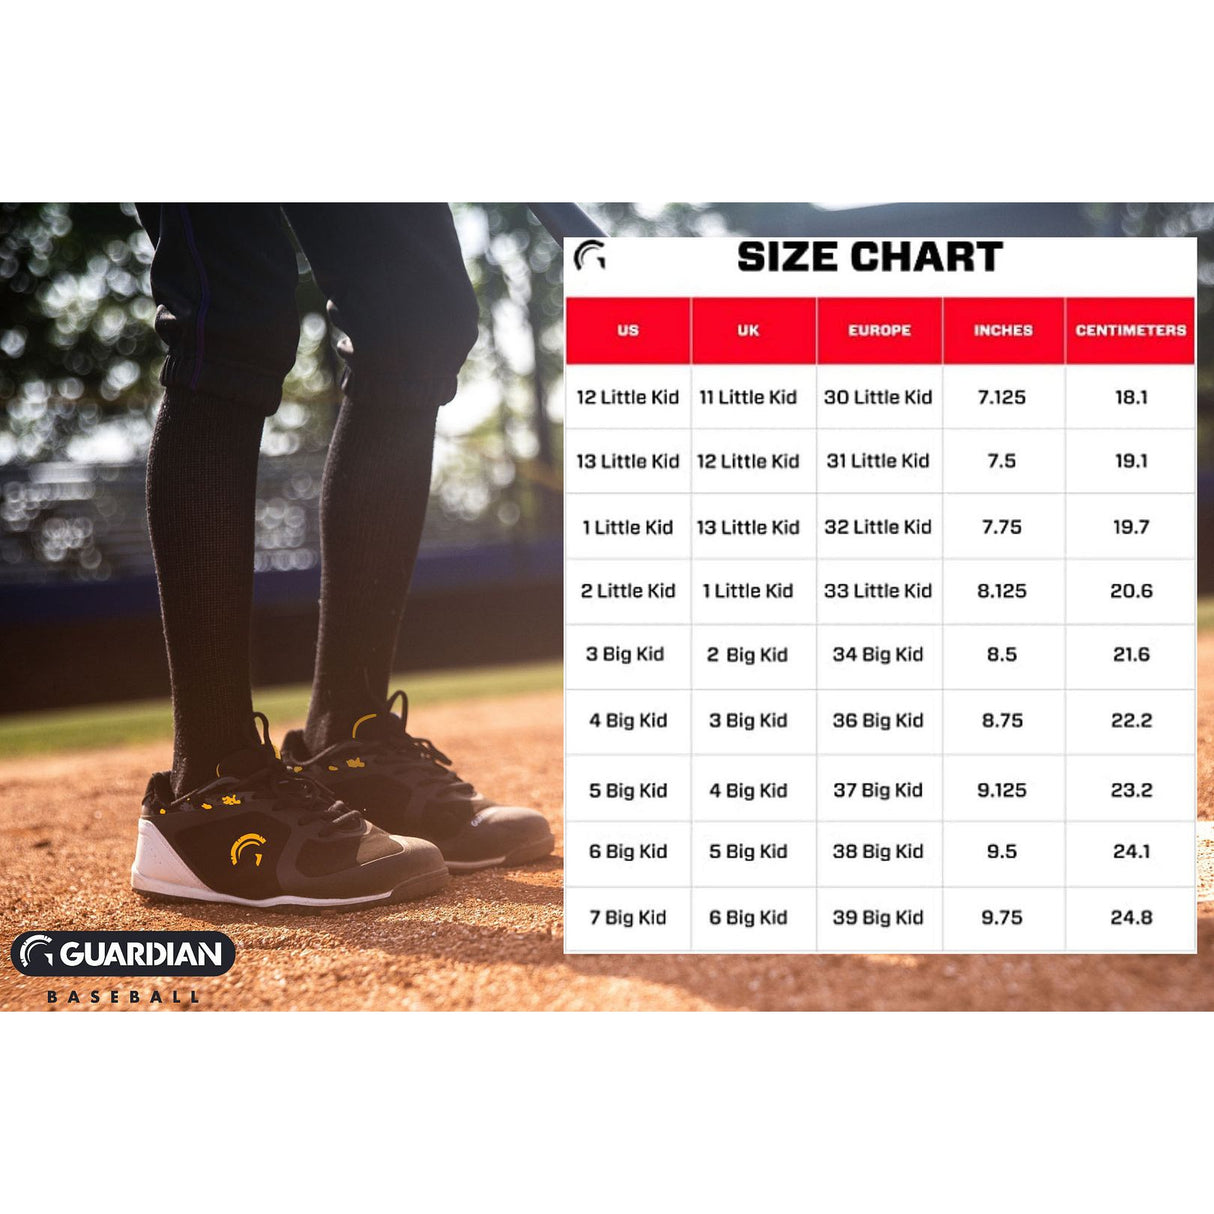 Guardian Baseball-Turf Shoes-Guardian Baseball